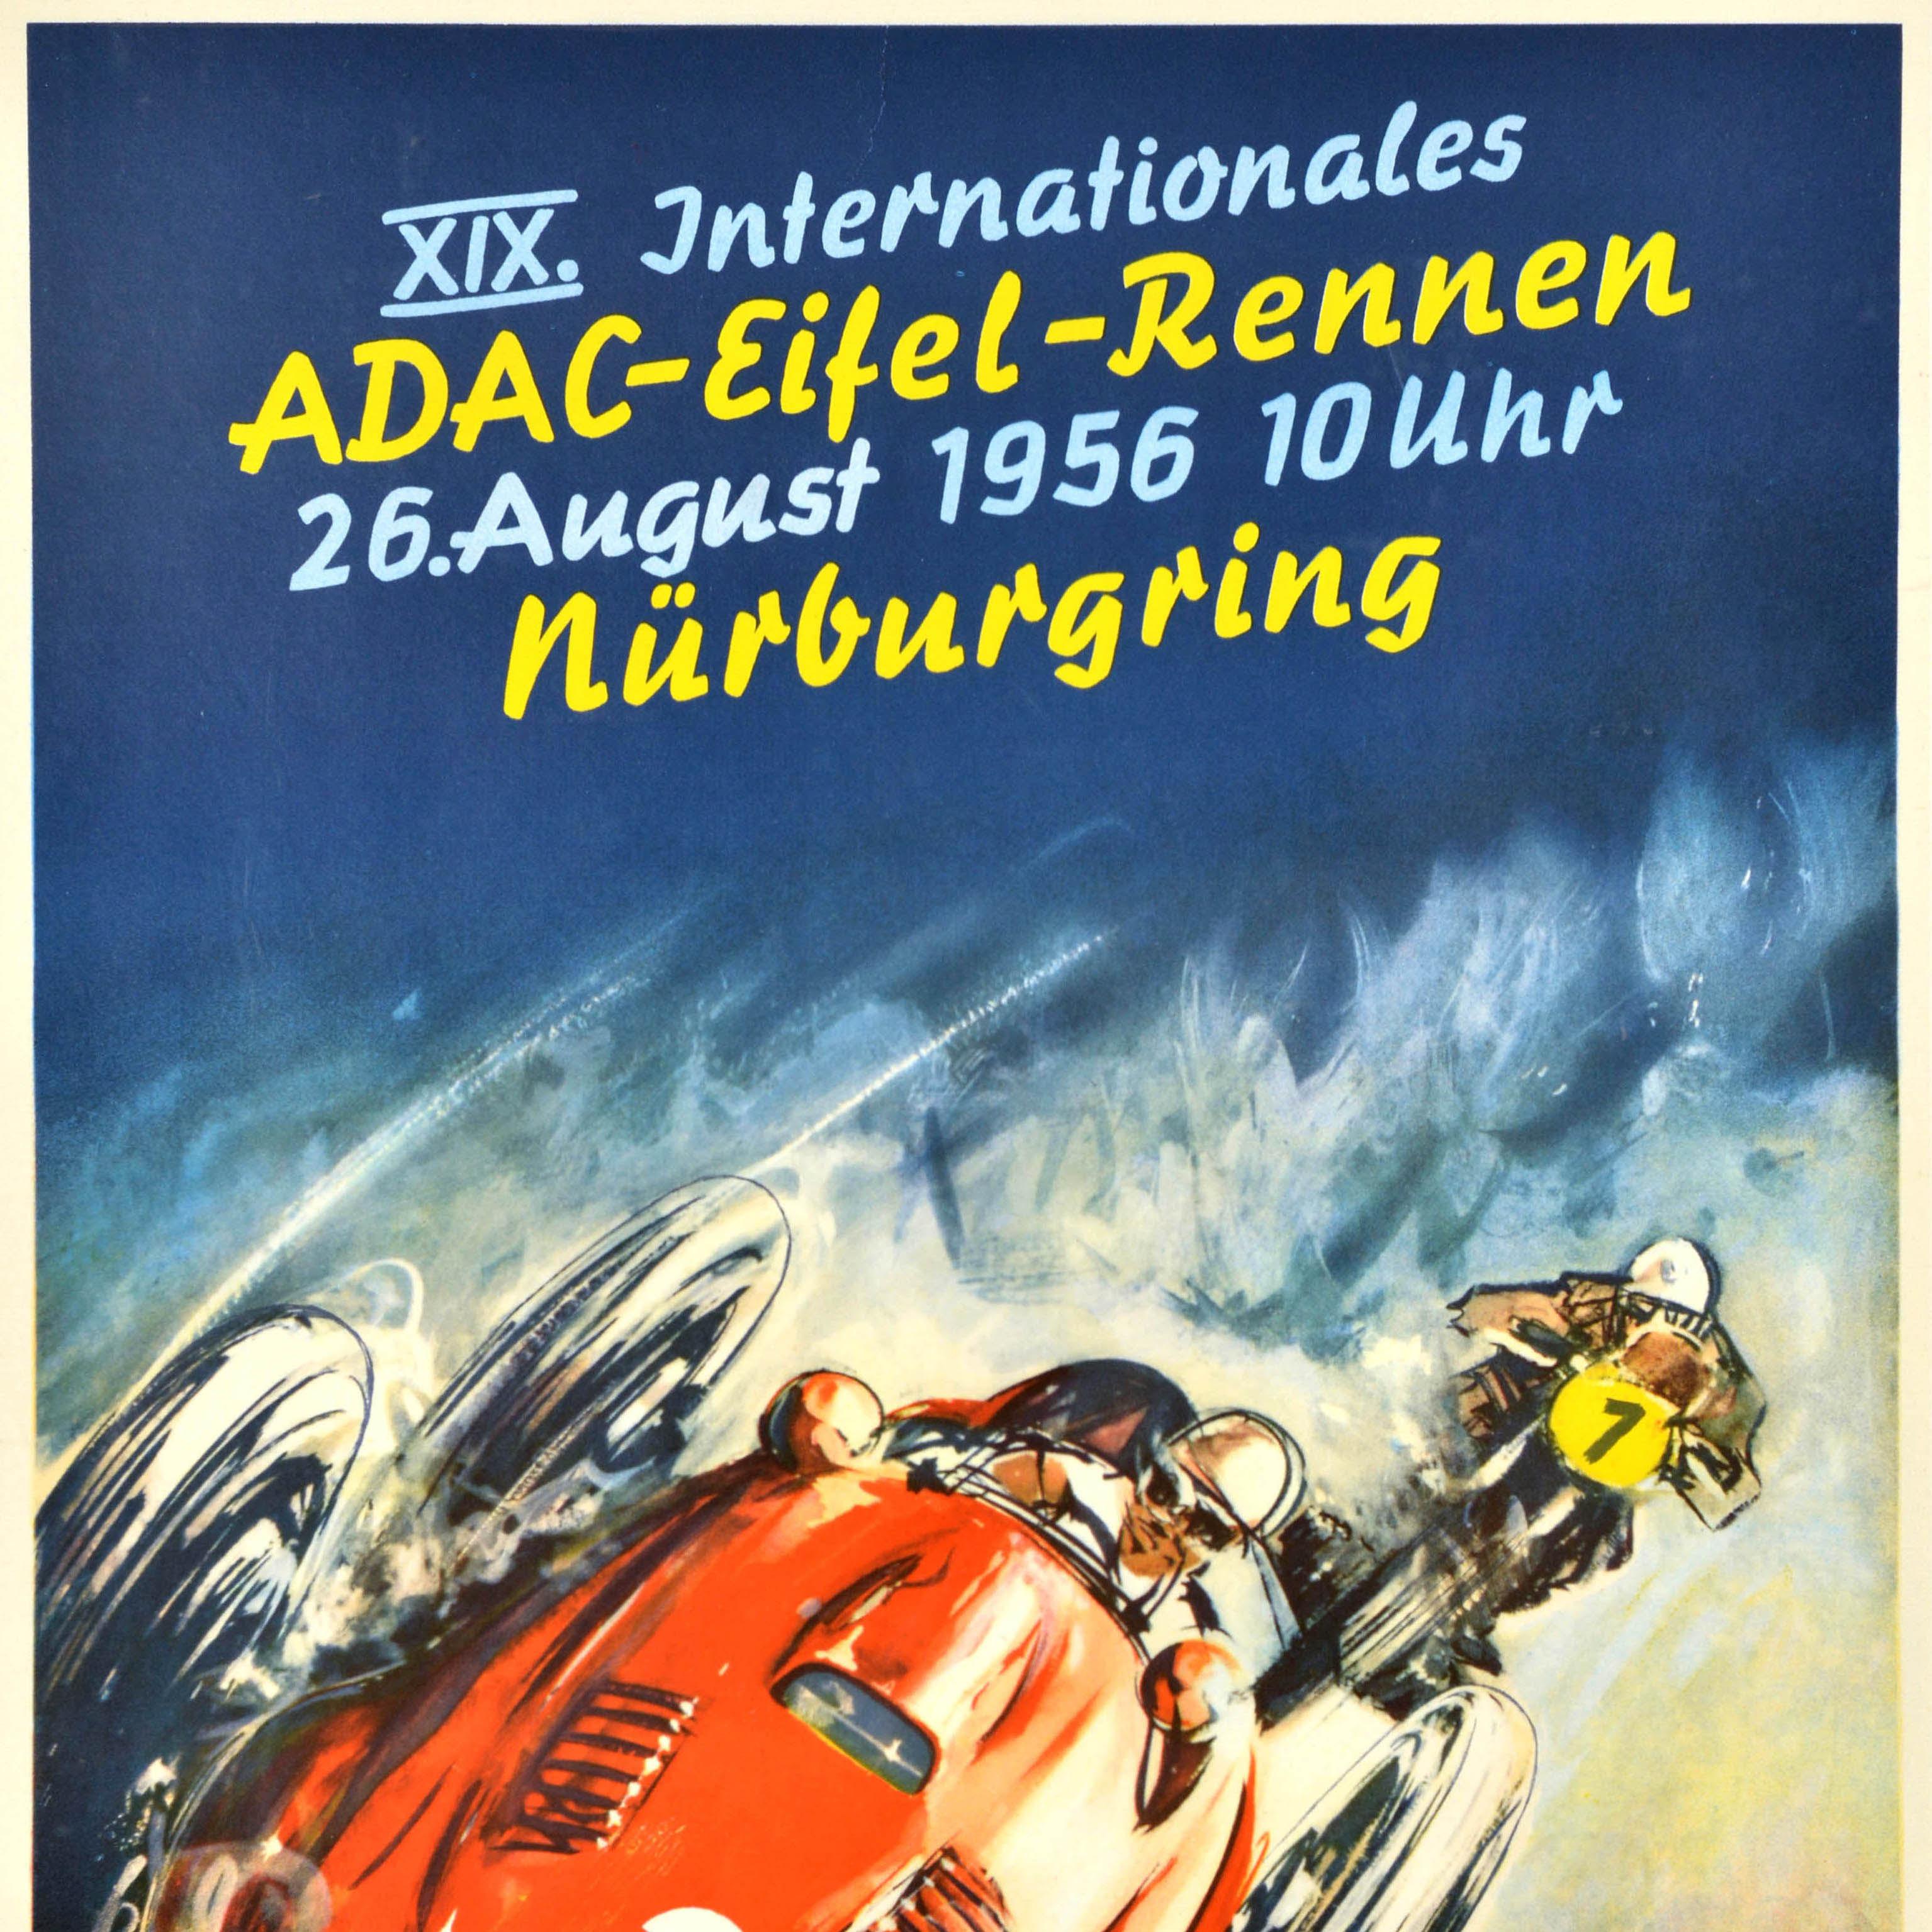 Original vintage motorsport poster for the XIX Internationales ADAC Eifel Rennen annual international motor race organised by the Allgemeiner Deutscher Automobil-Club (ADAC; established 1903) German Automobile Club on 26 August 1956 in Nurburgring